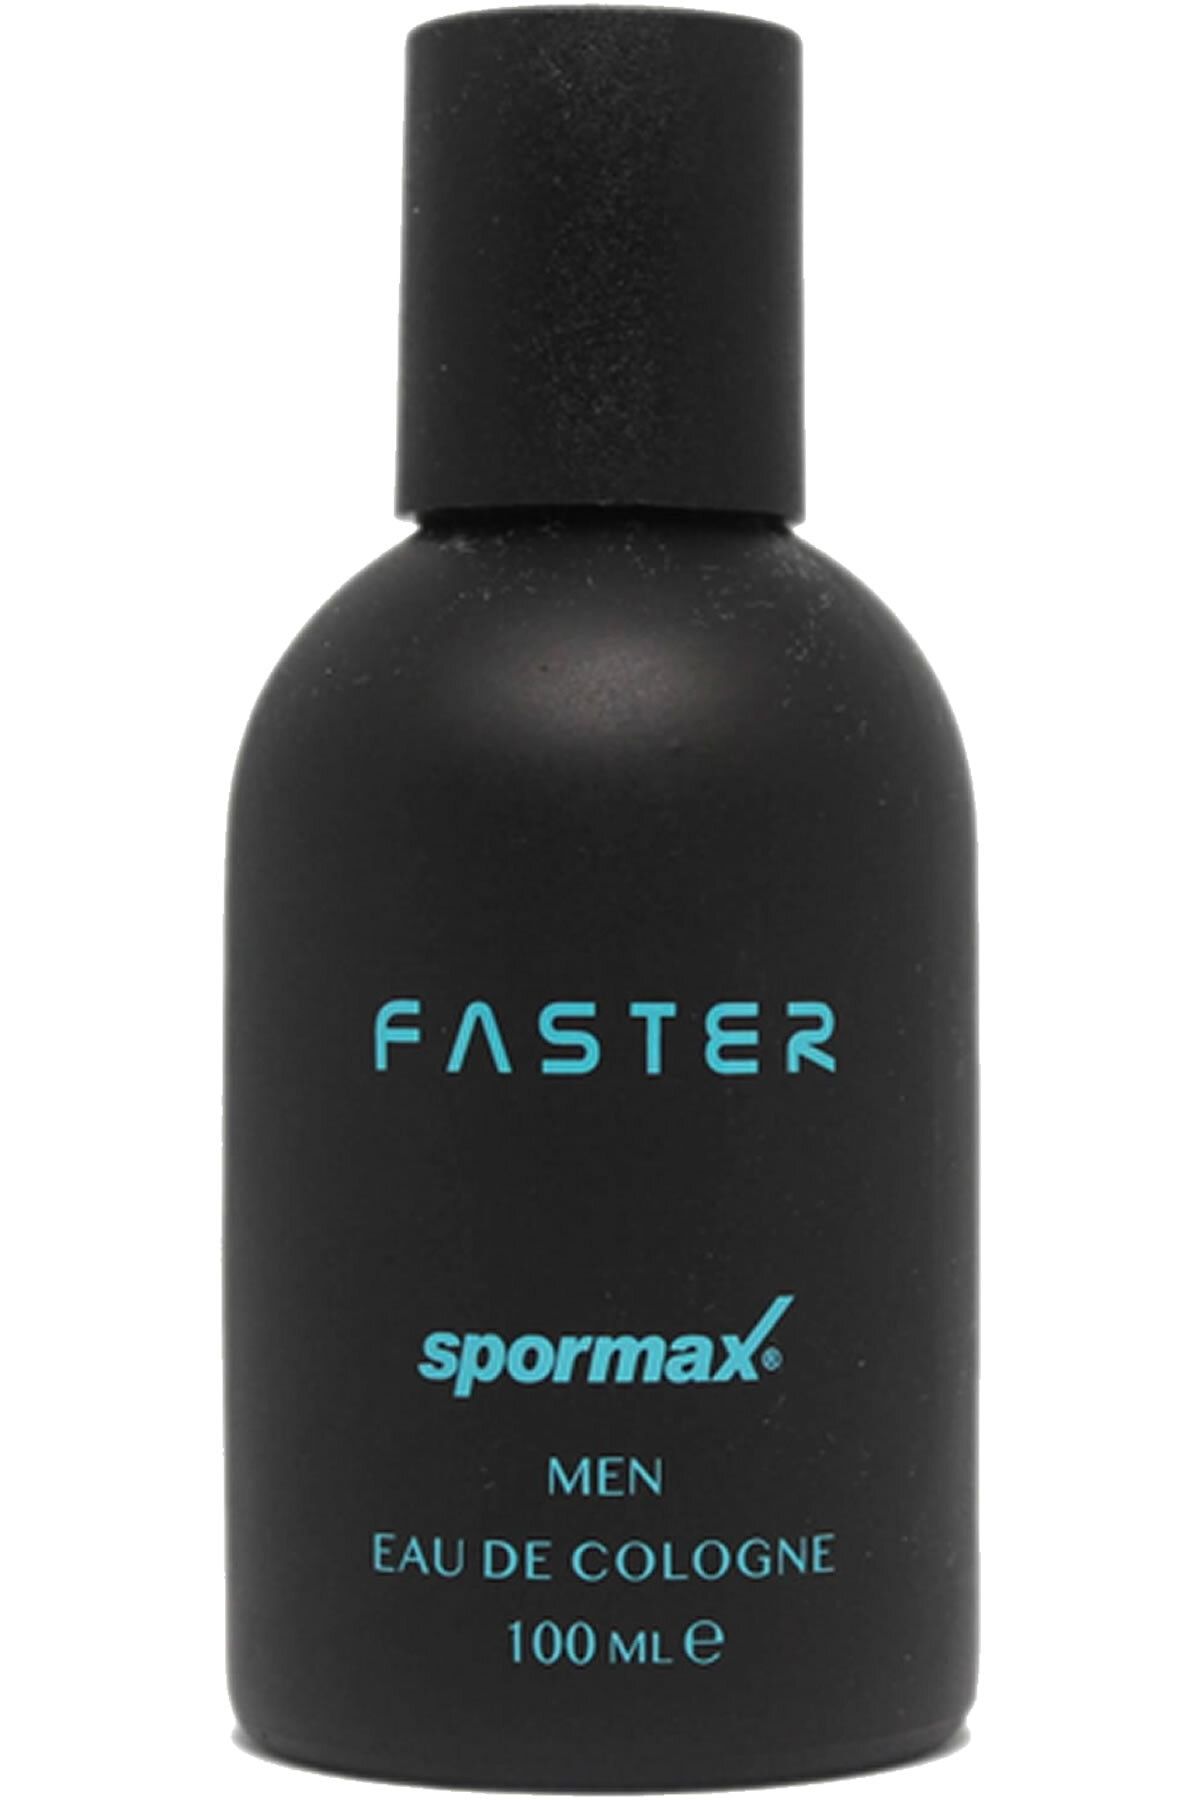 spormax Faster Edc 100 ml Erkek Parfüm